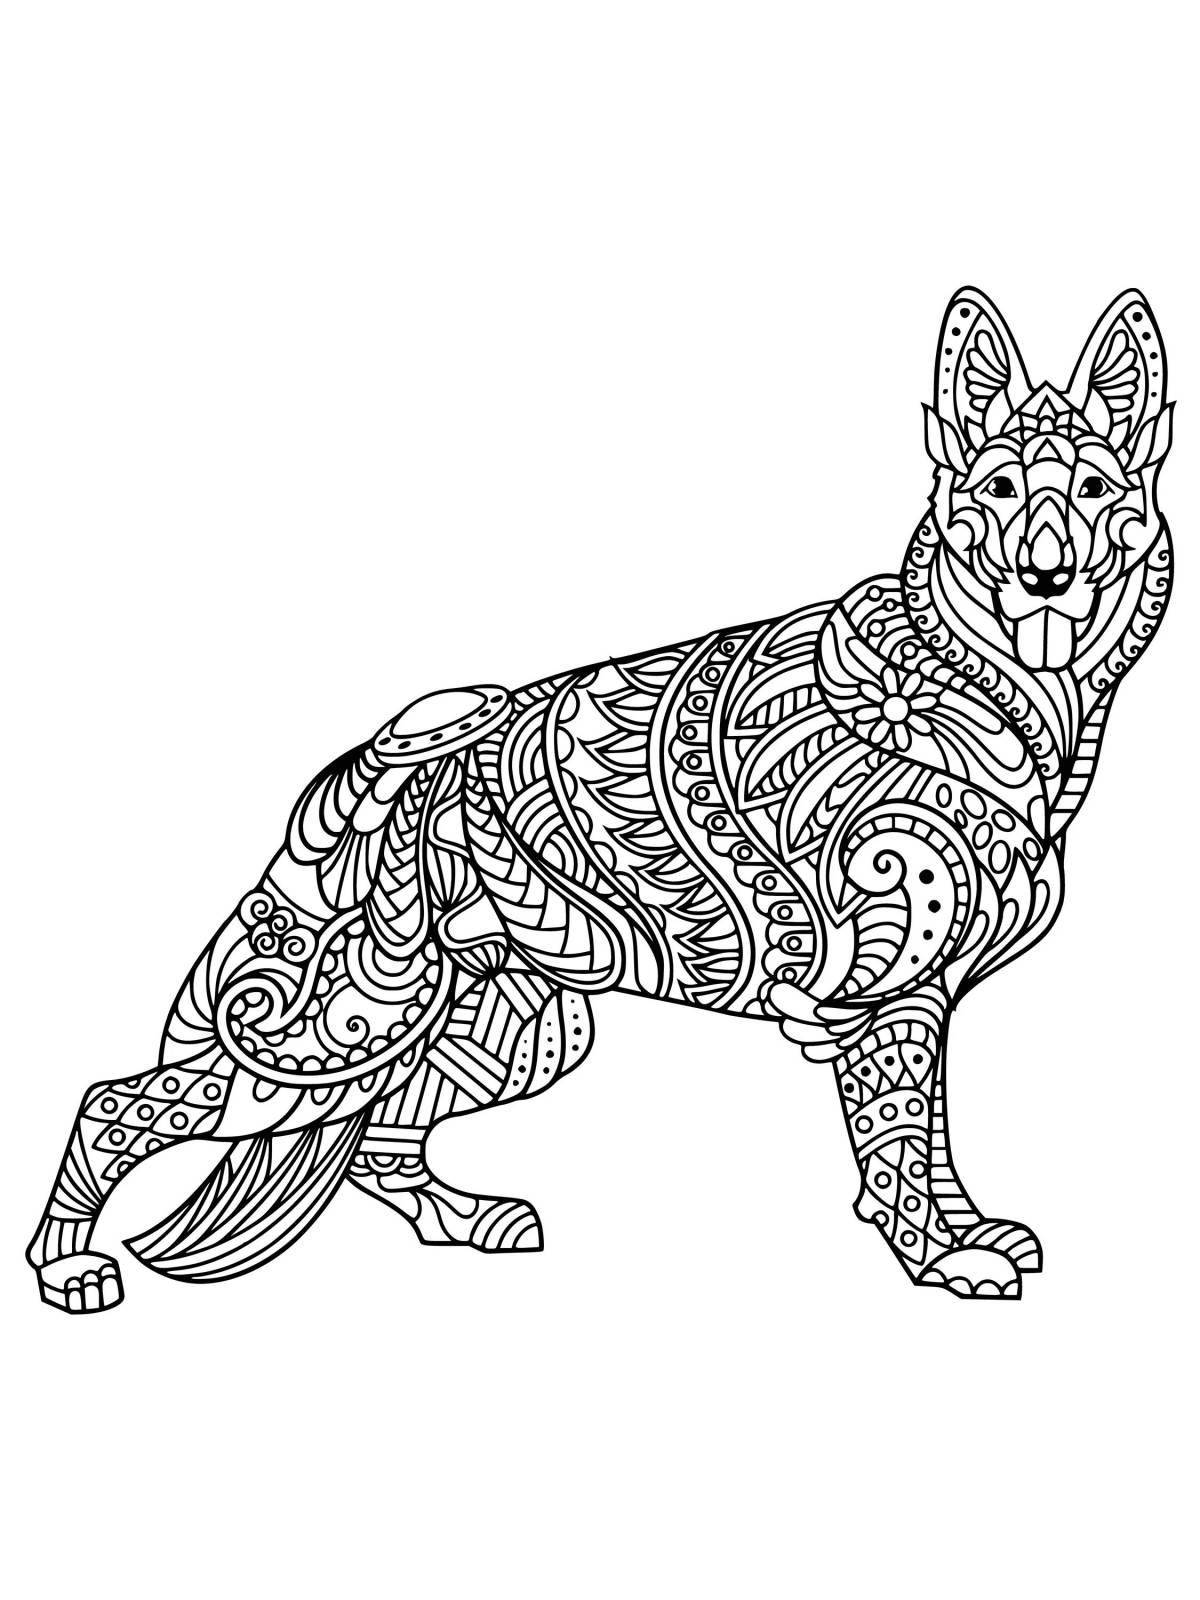 Креативная раскраска собаки с рисунком